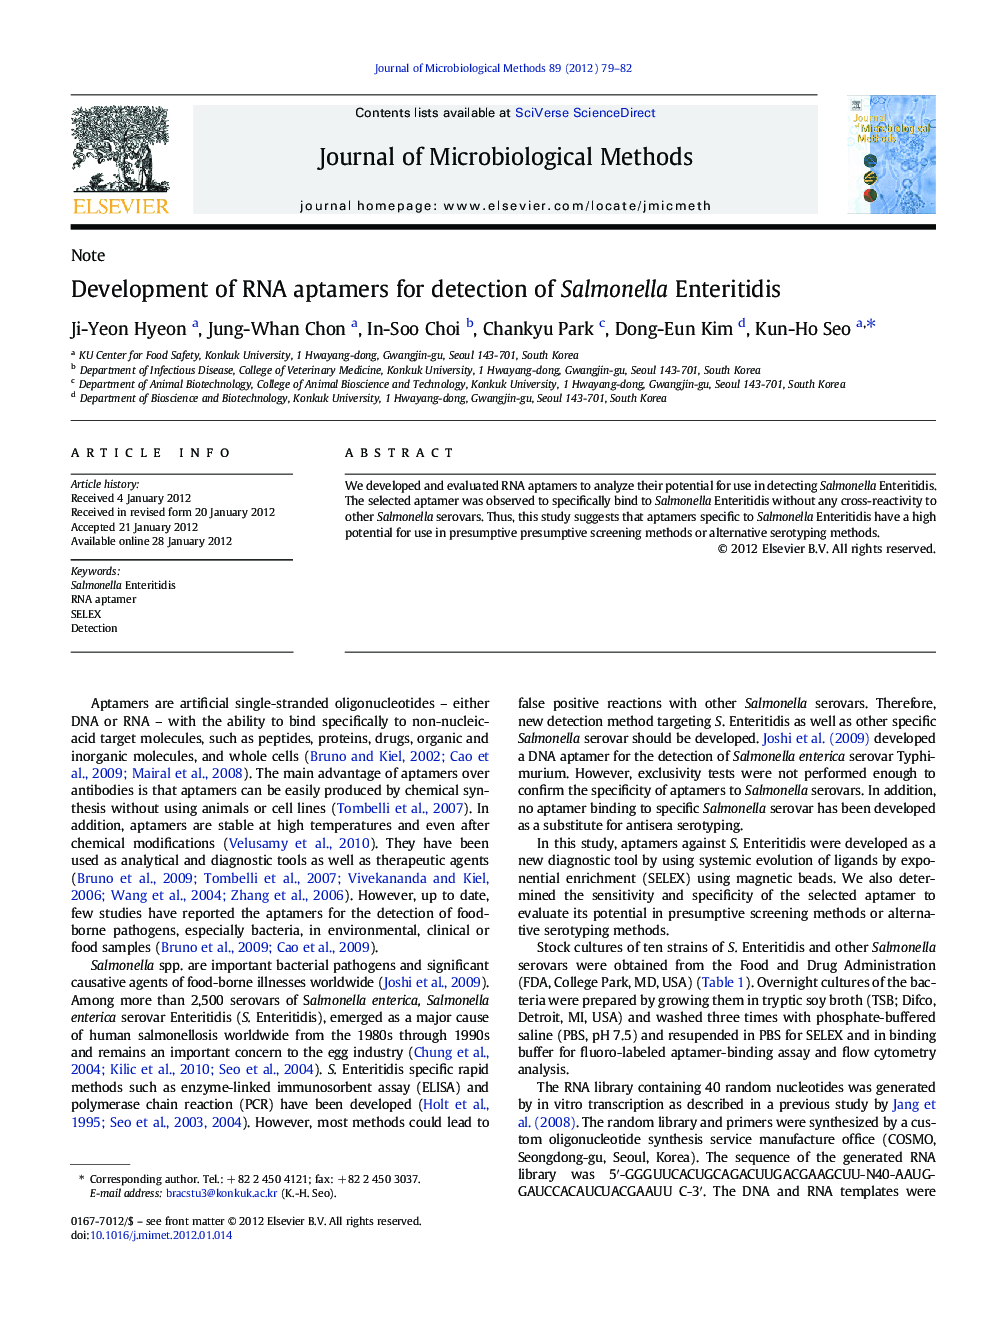 Development of RNA aptamers for detection of Salmonella Enteritidis